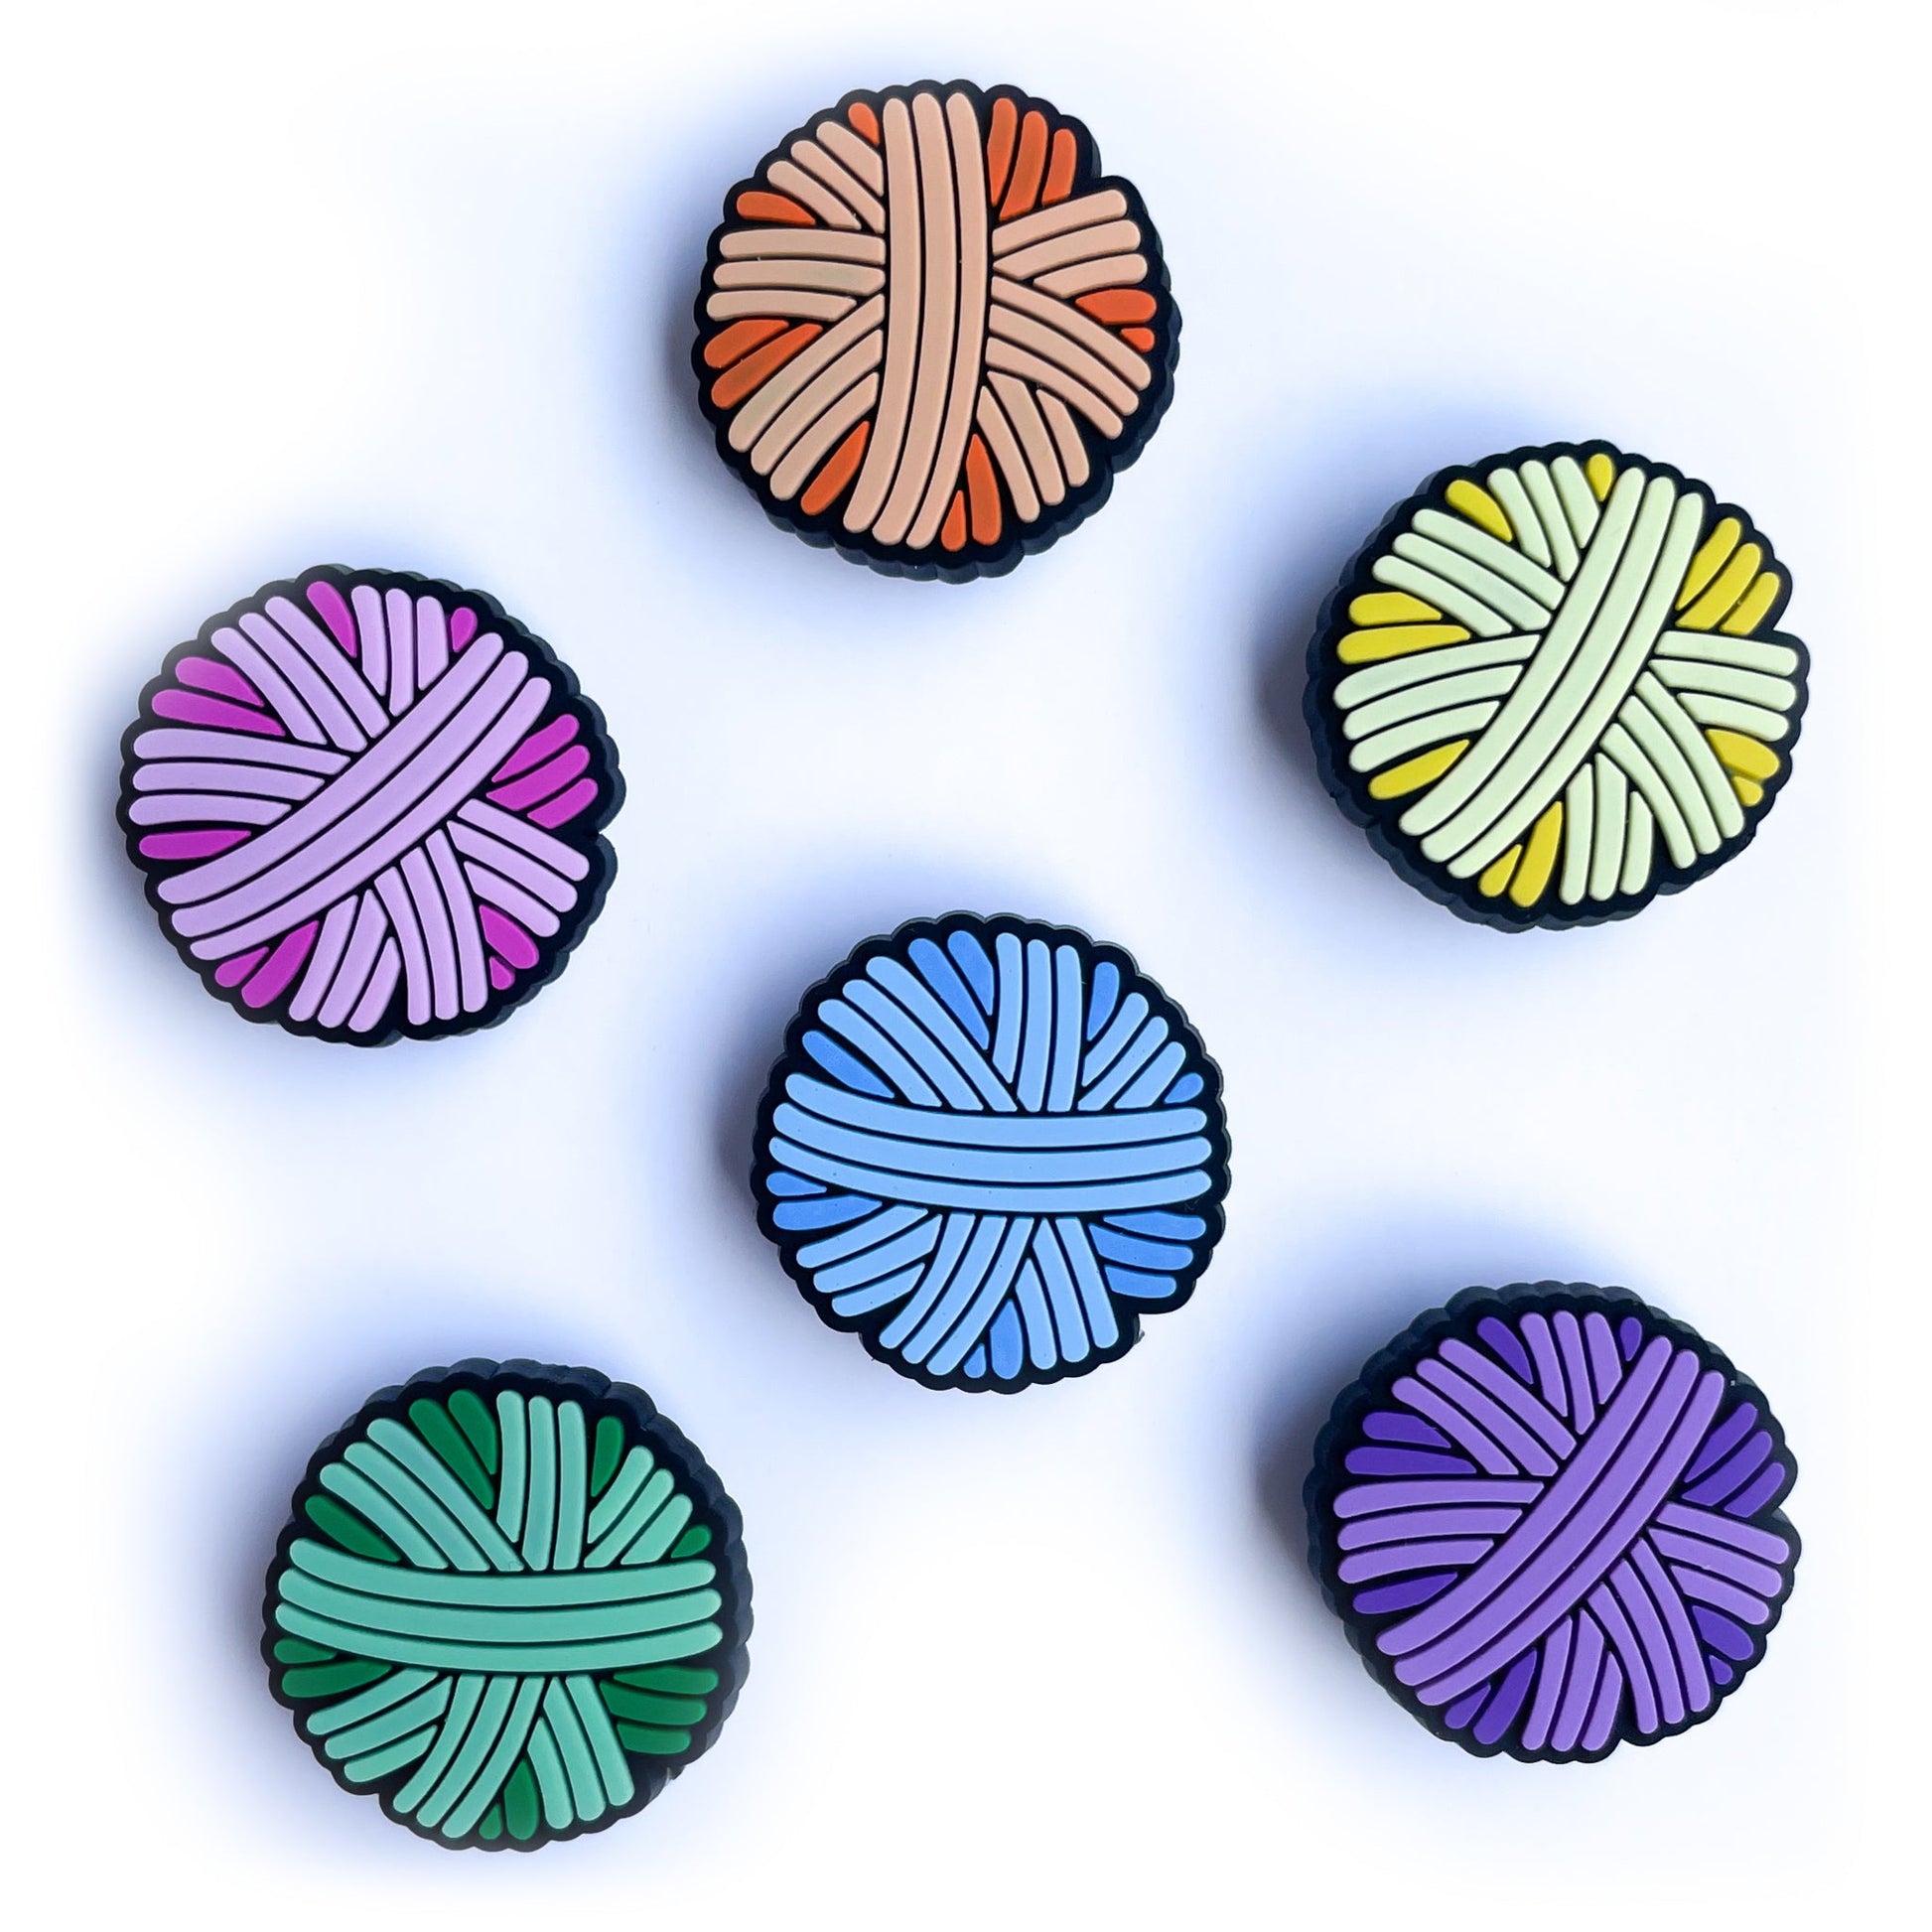 PVC charms shaped like yarn balls in pink, orange, yellow, mint, blue and purple.